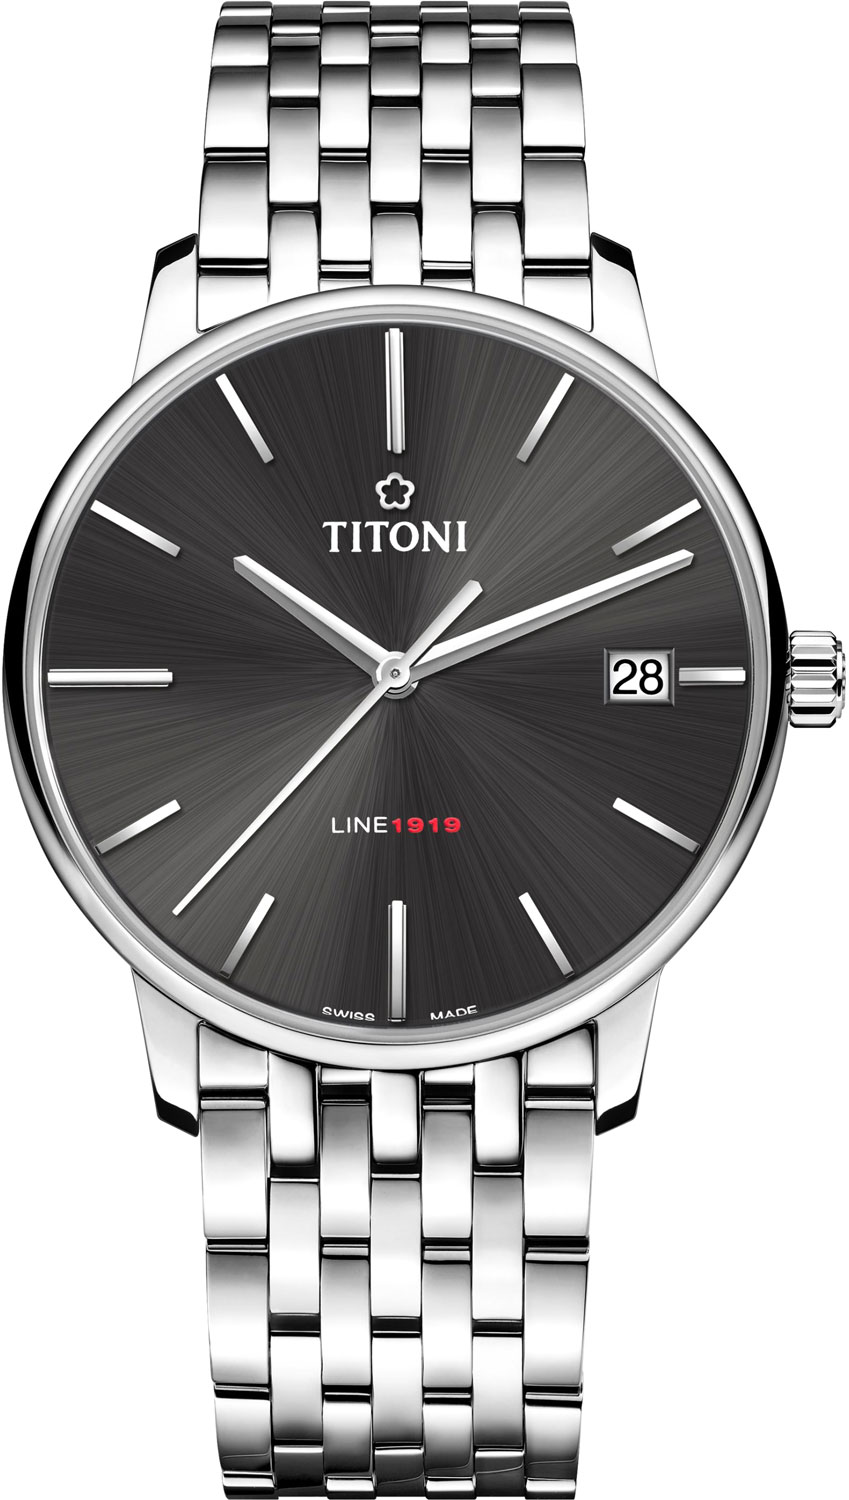 Titoni 83919-S-576